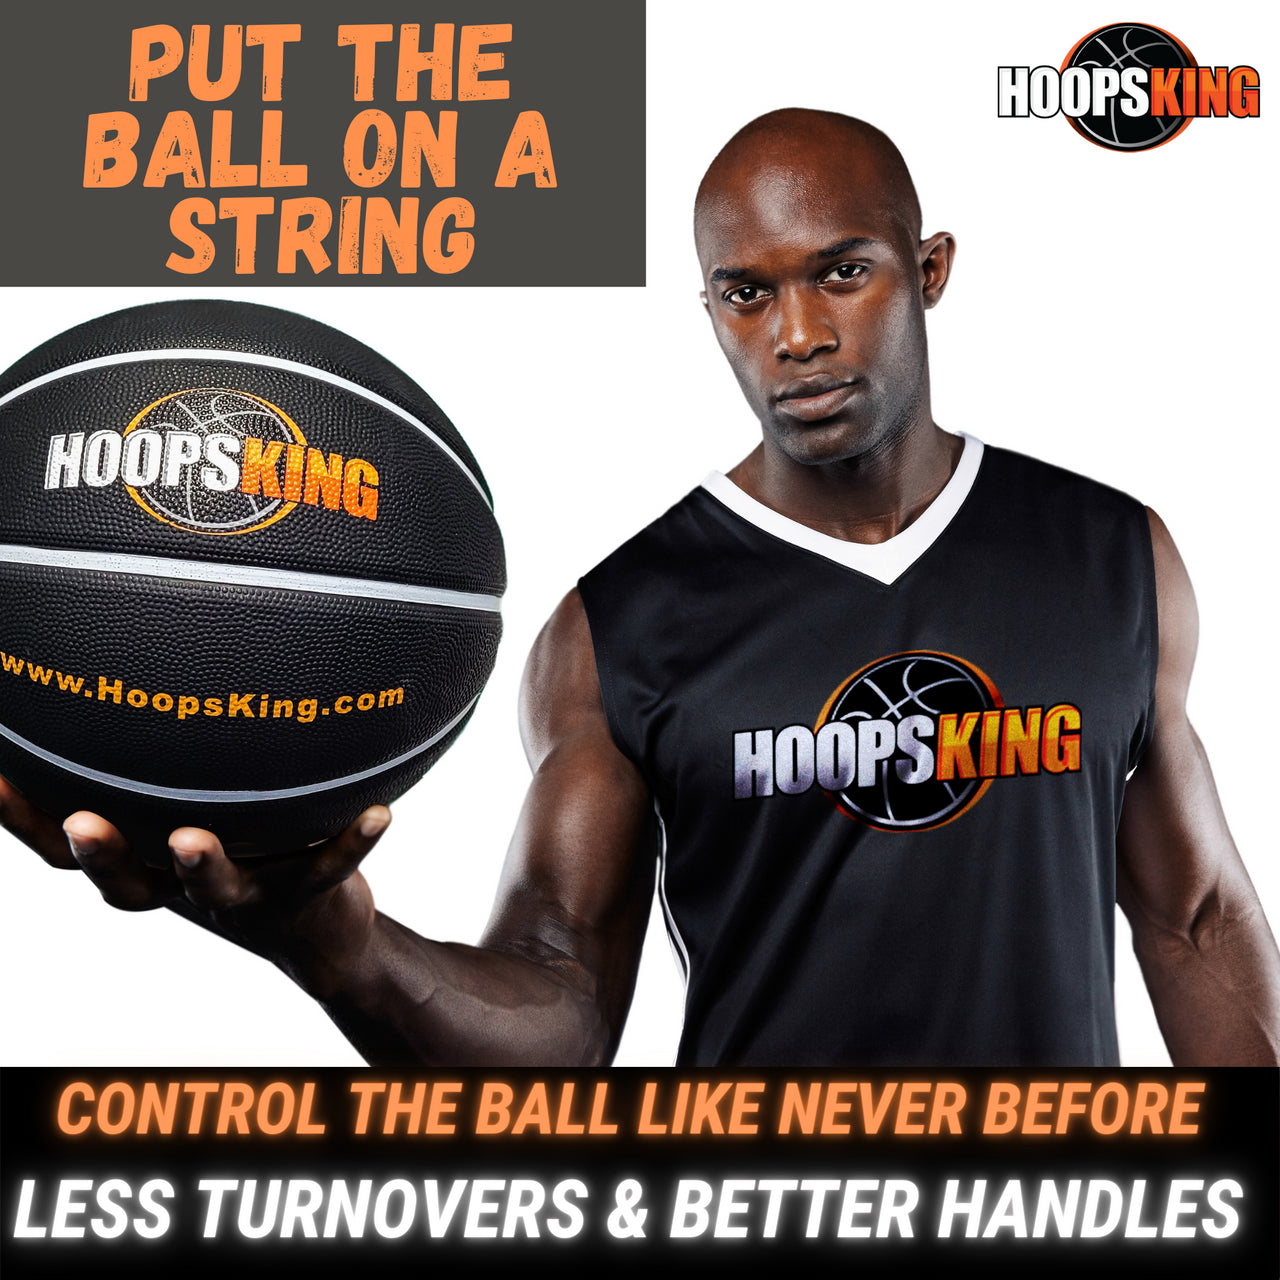 weighted basketball hoopsking ball